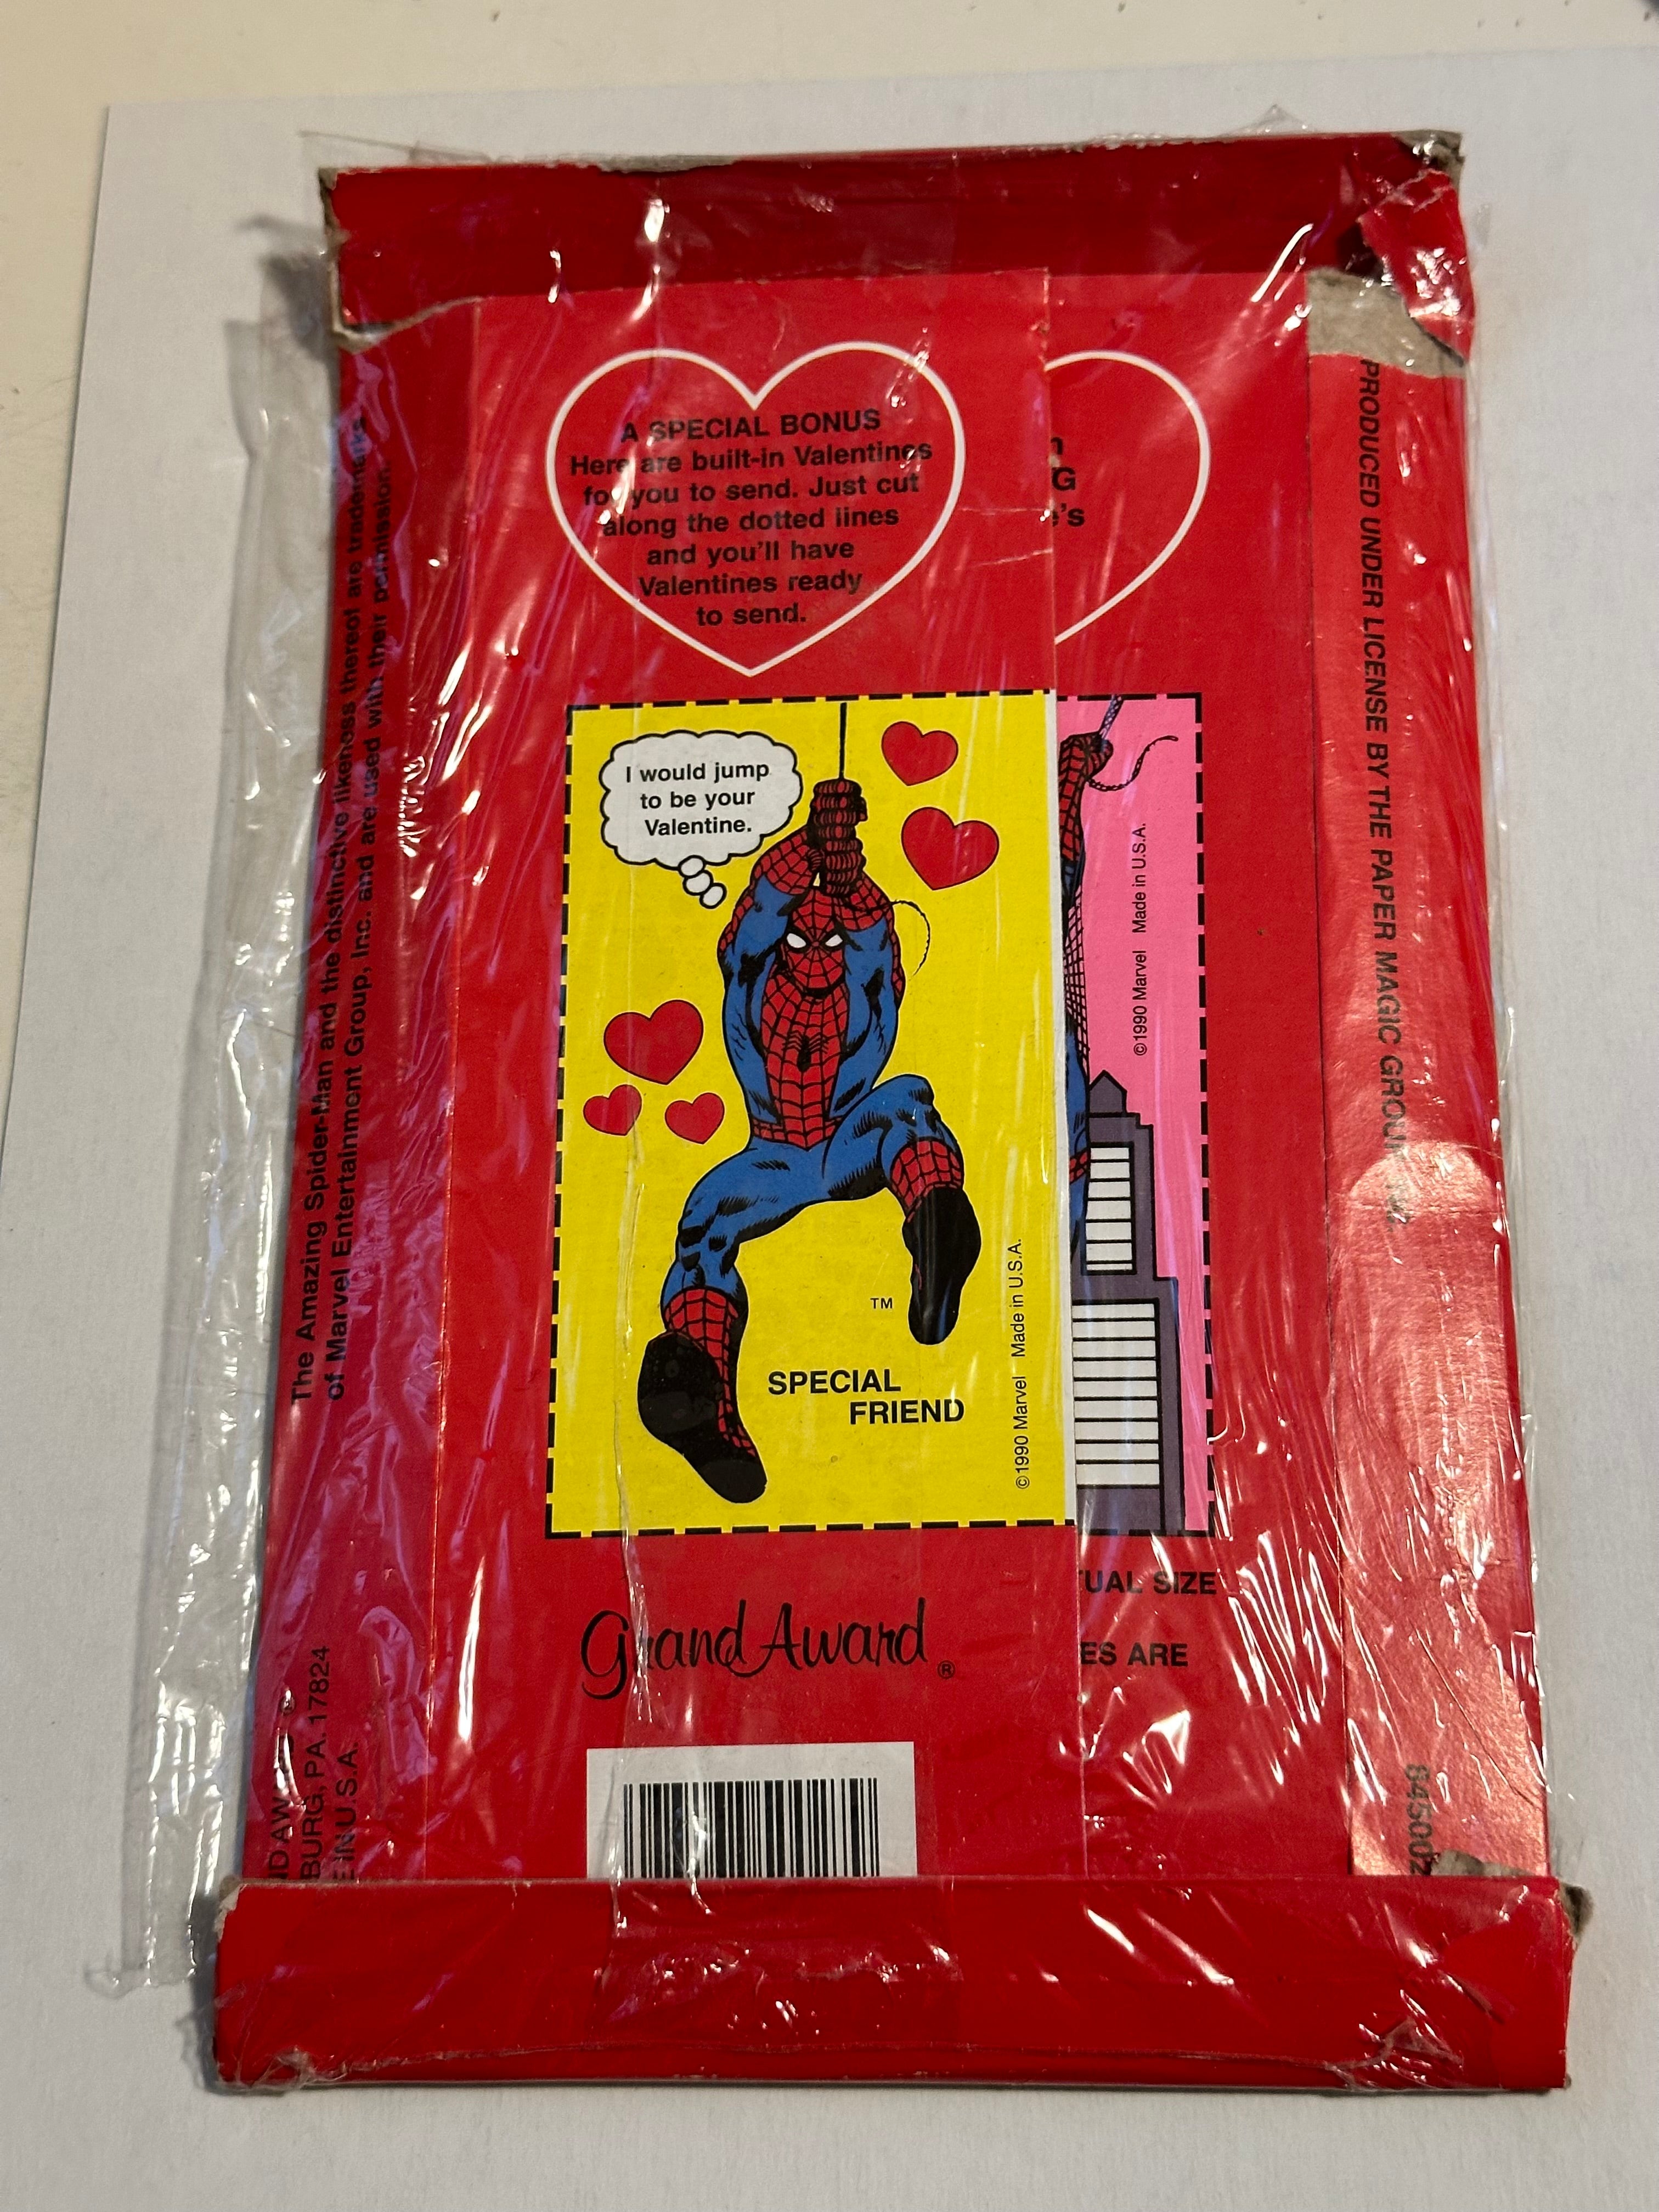 Spider-Man, Valentine’s rare vintage factory seal box, 1990